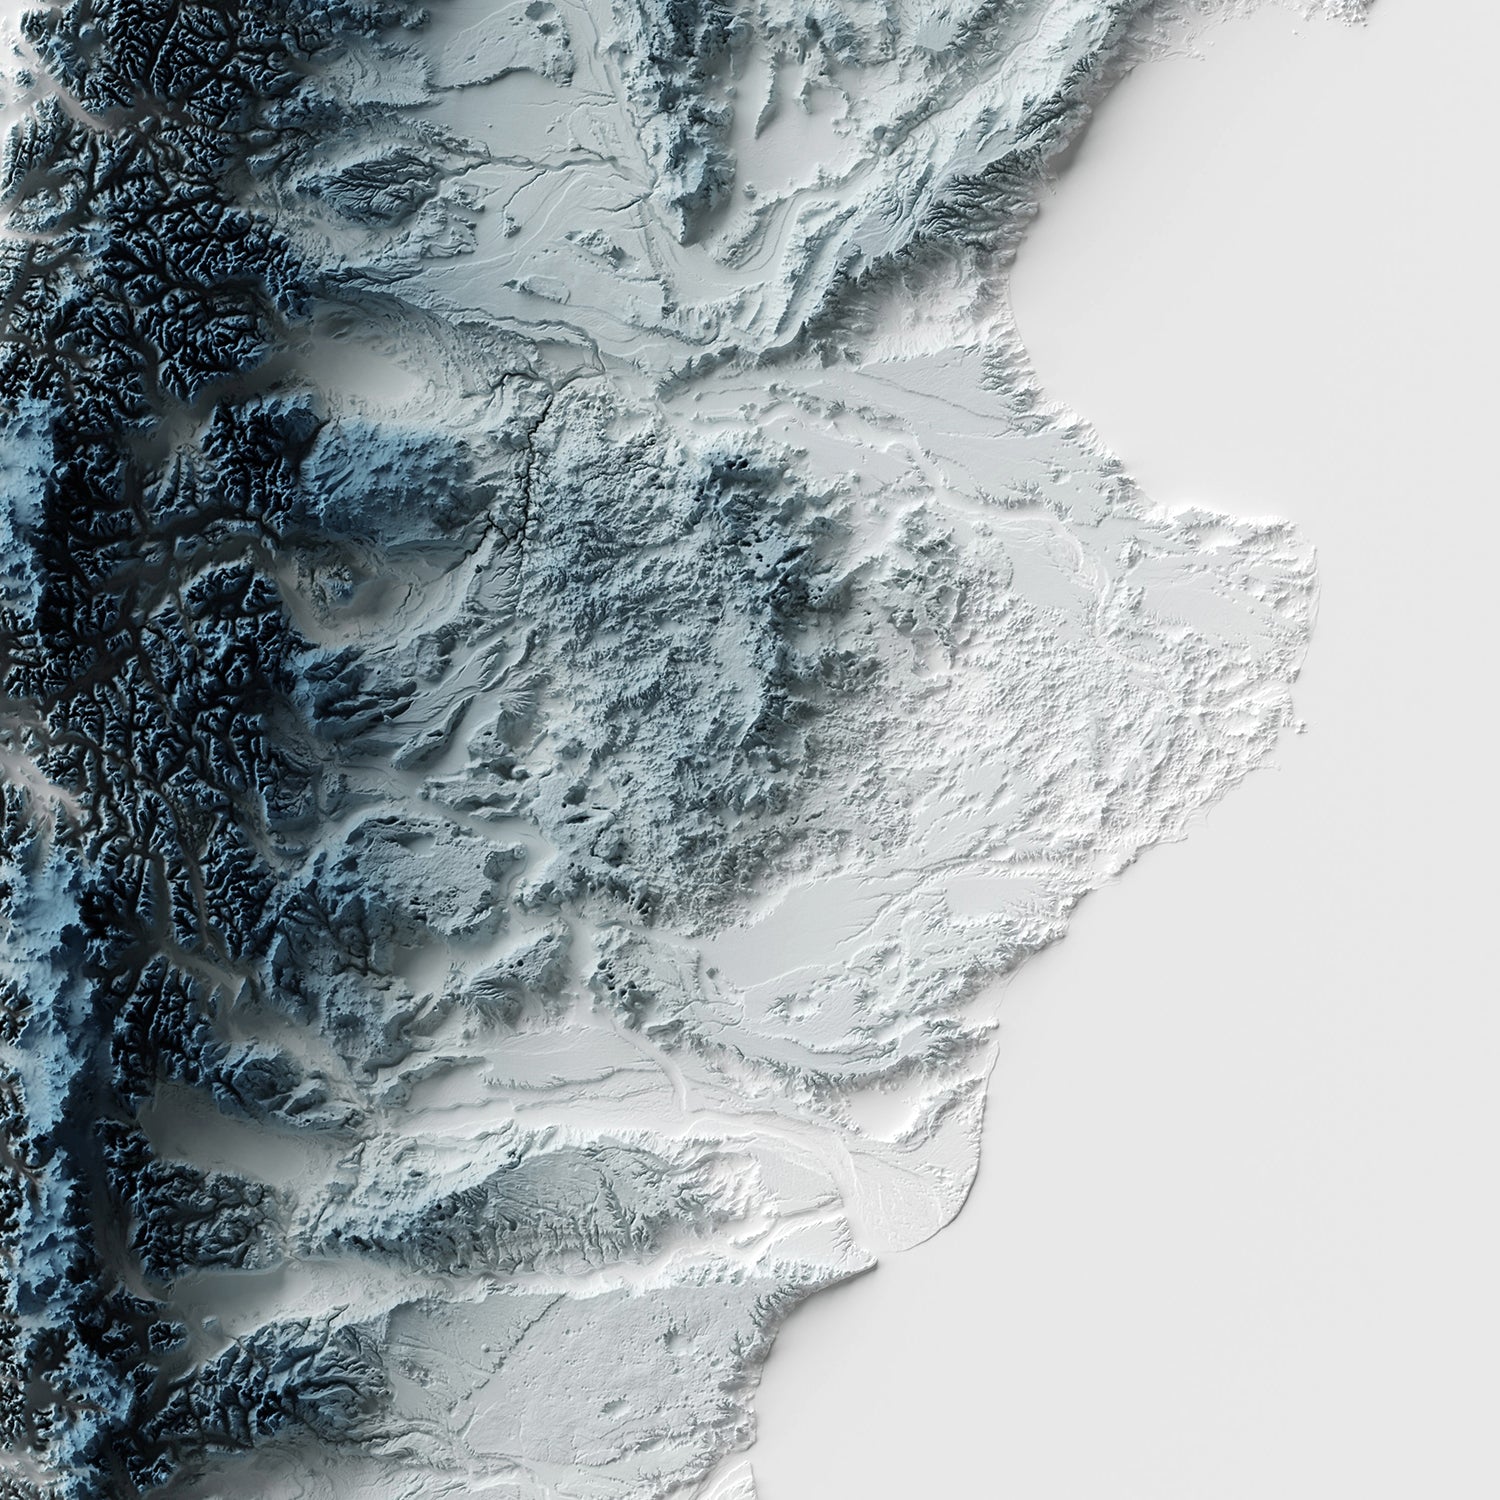 Patagonia - Minimalist Map